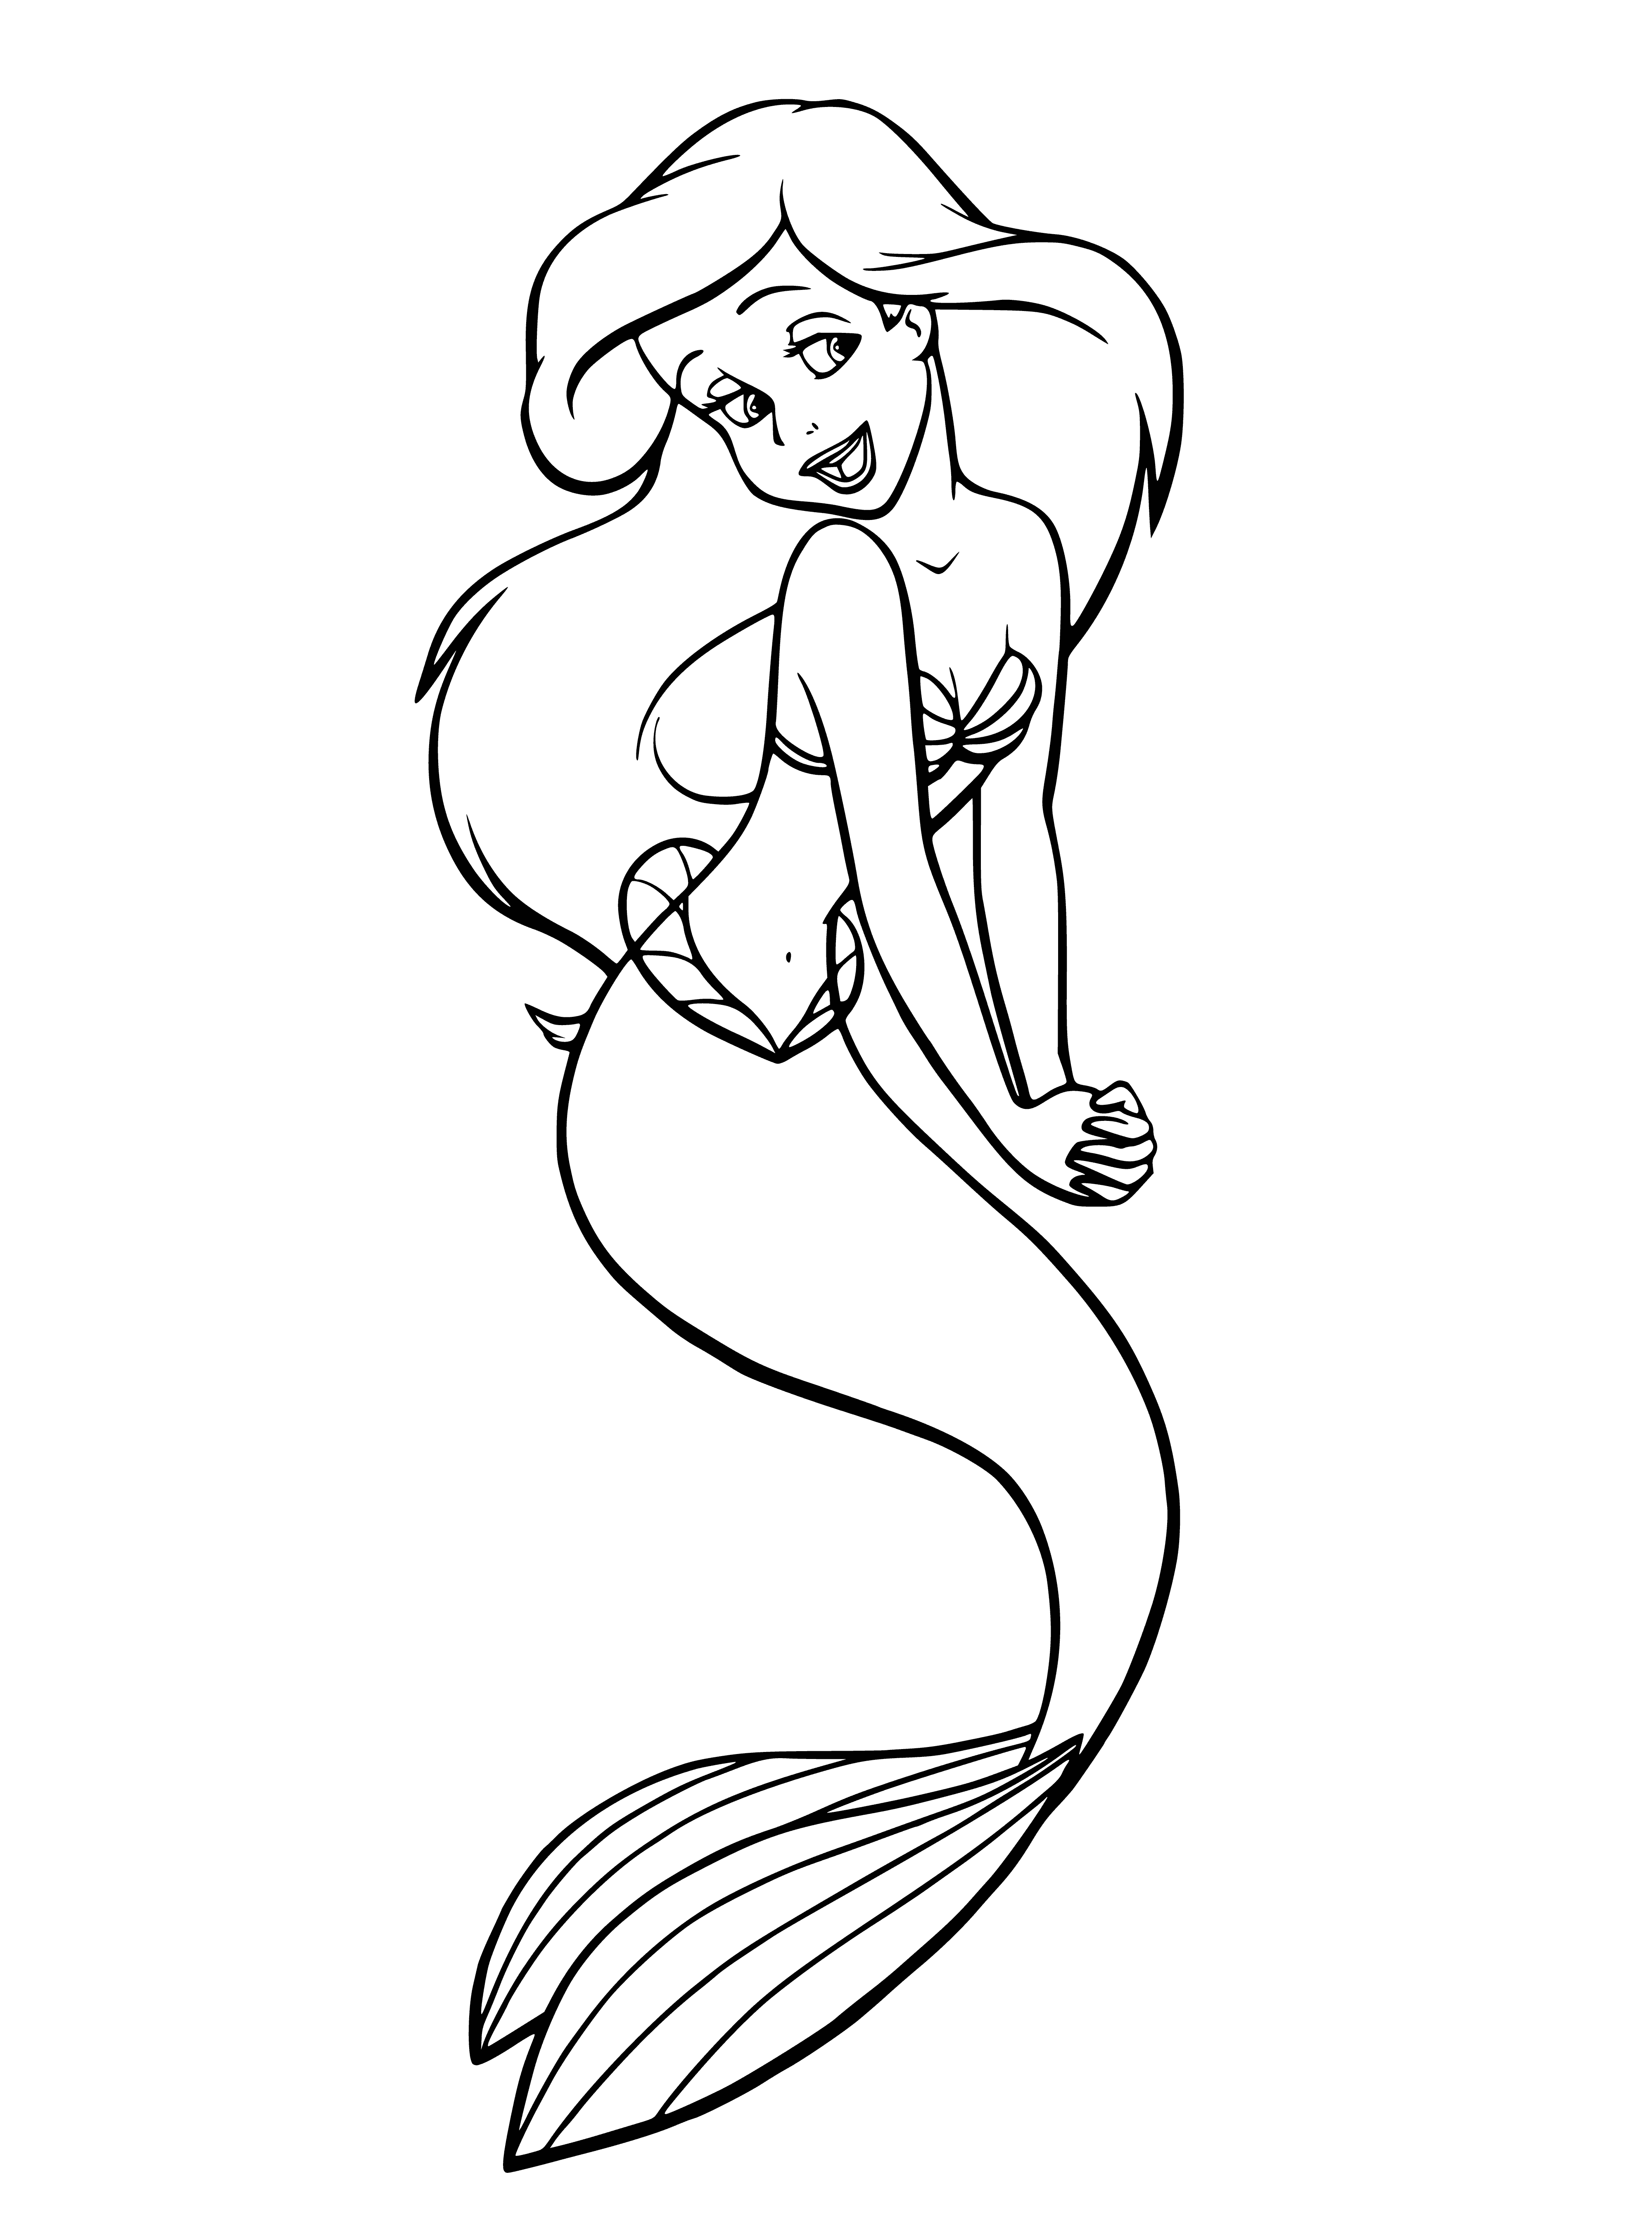 Little Mermaid Ariel coloring page